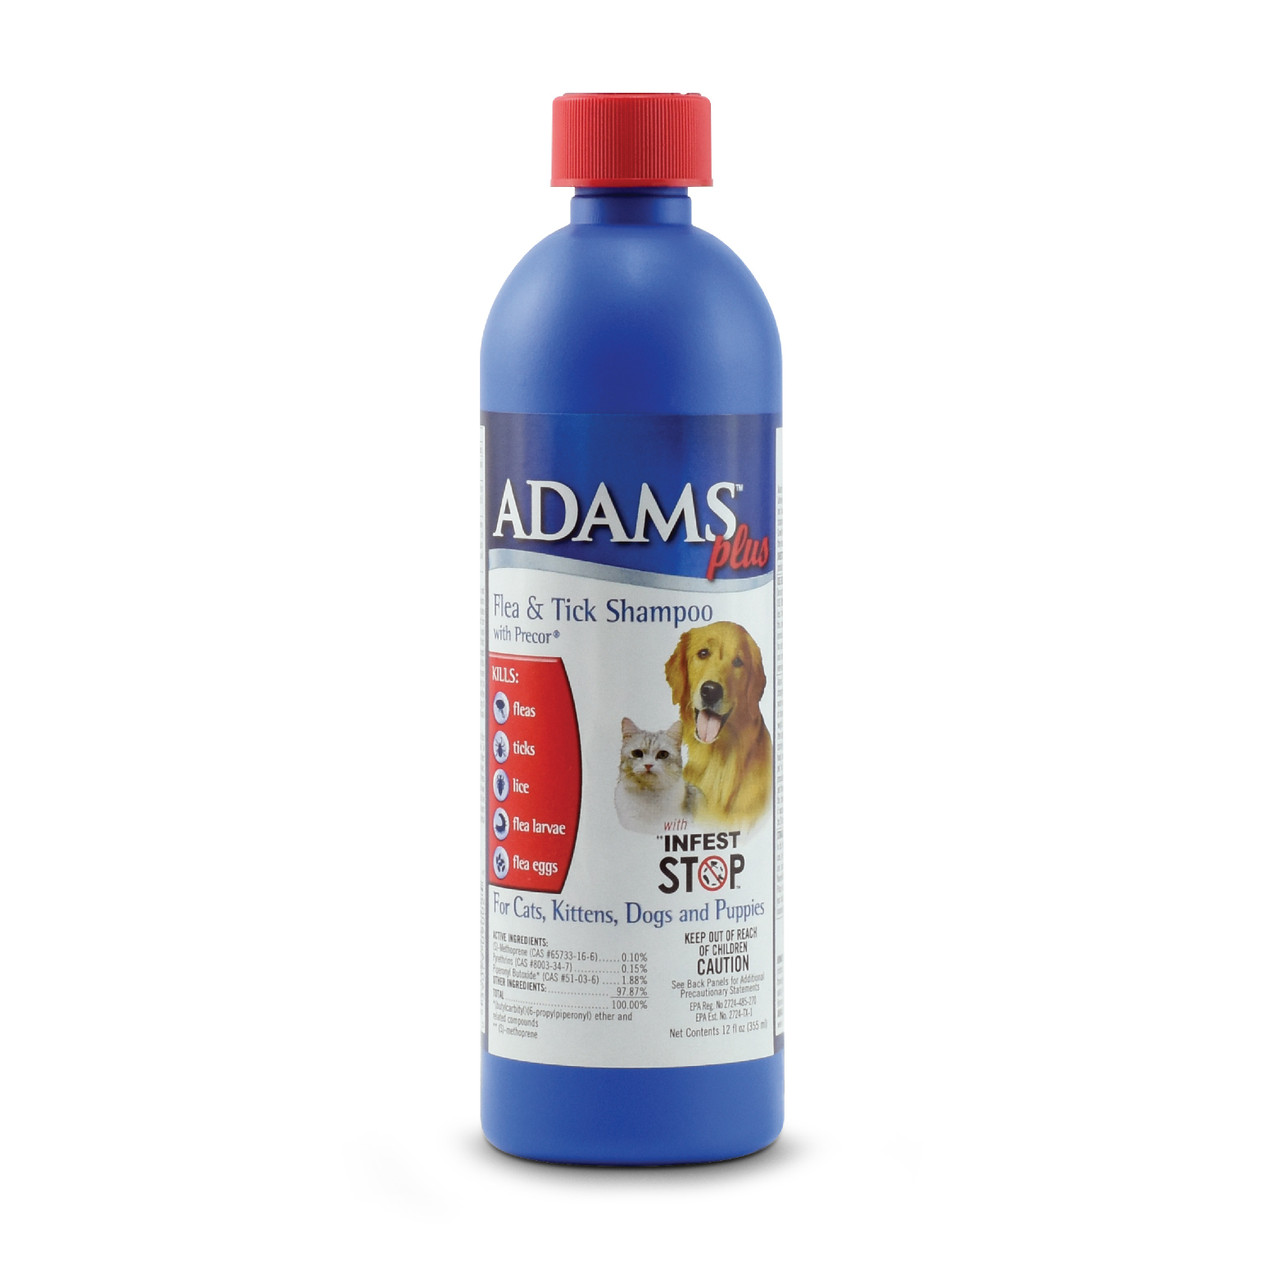 adams flea & tick shampoo